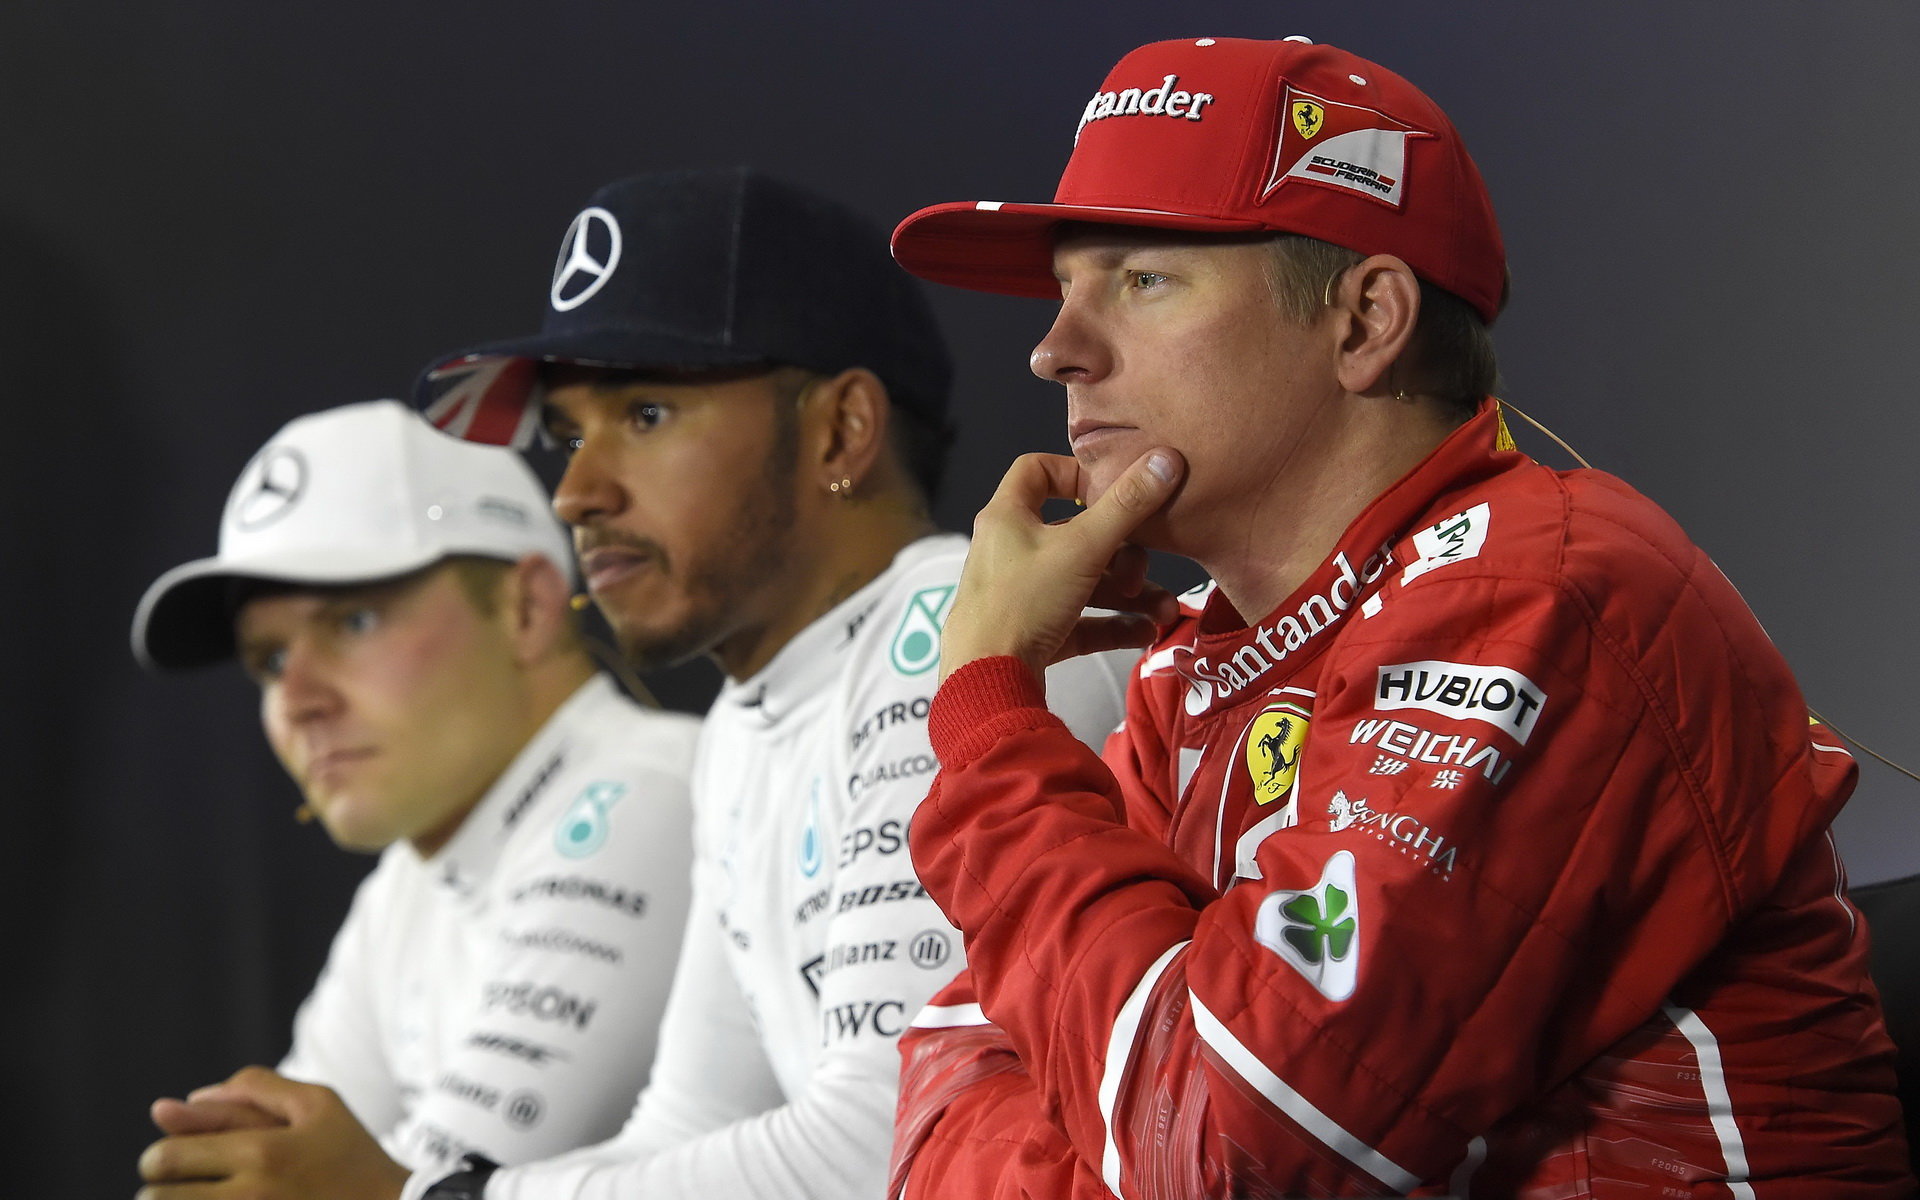 Kimi Räikkönen, Lewis Hamilton a Valtteri Bottas na tiskovce po závodě v Silverstone